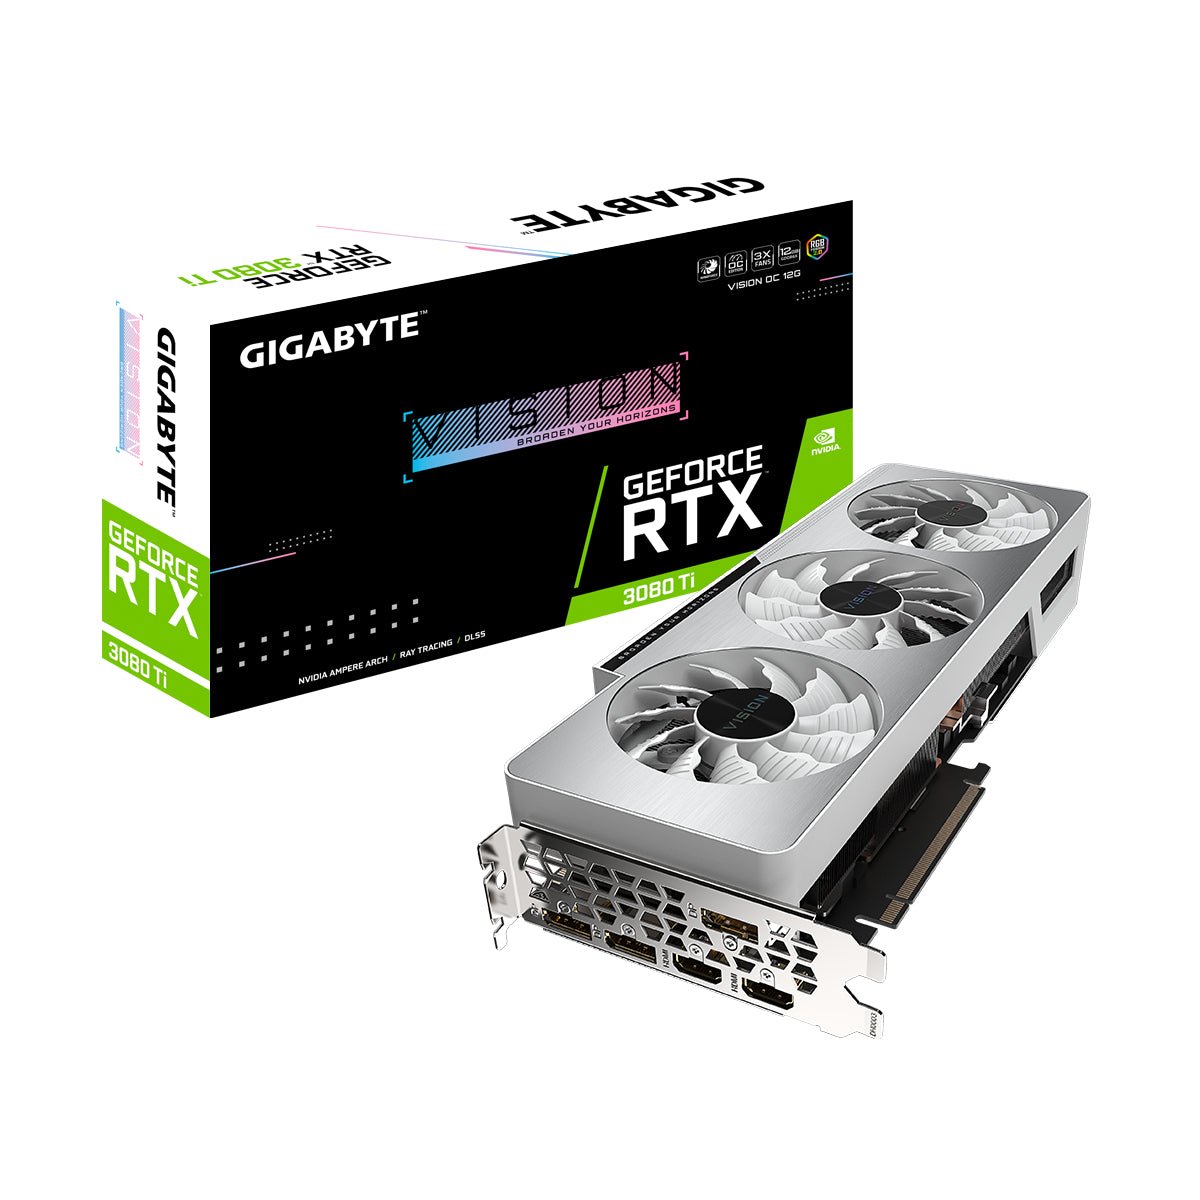 Gigabyte GeForce RTX 3080 Ti VISION OC 12G Graphics Card - Store 974 | ستور ٩٧٤